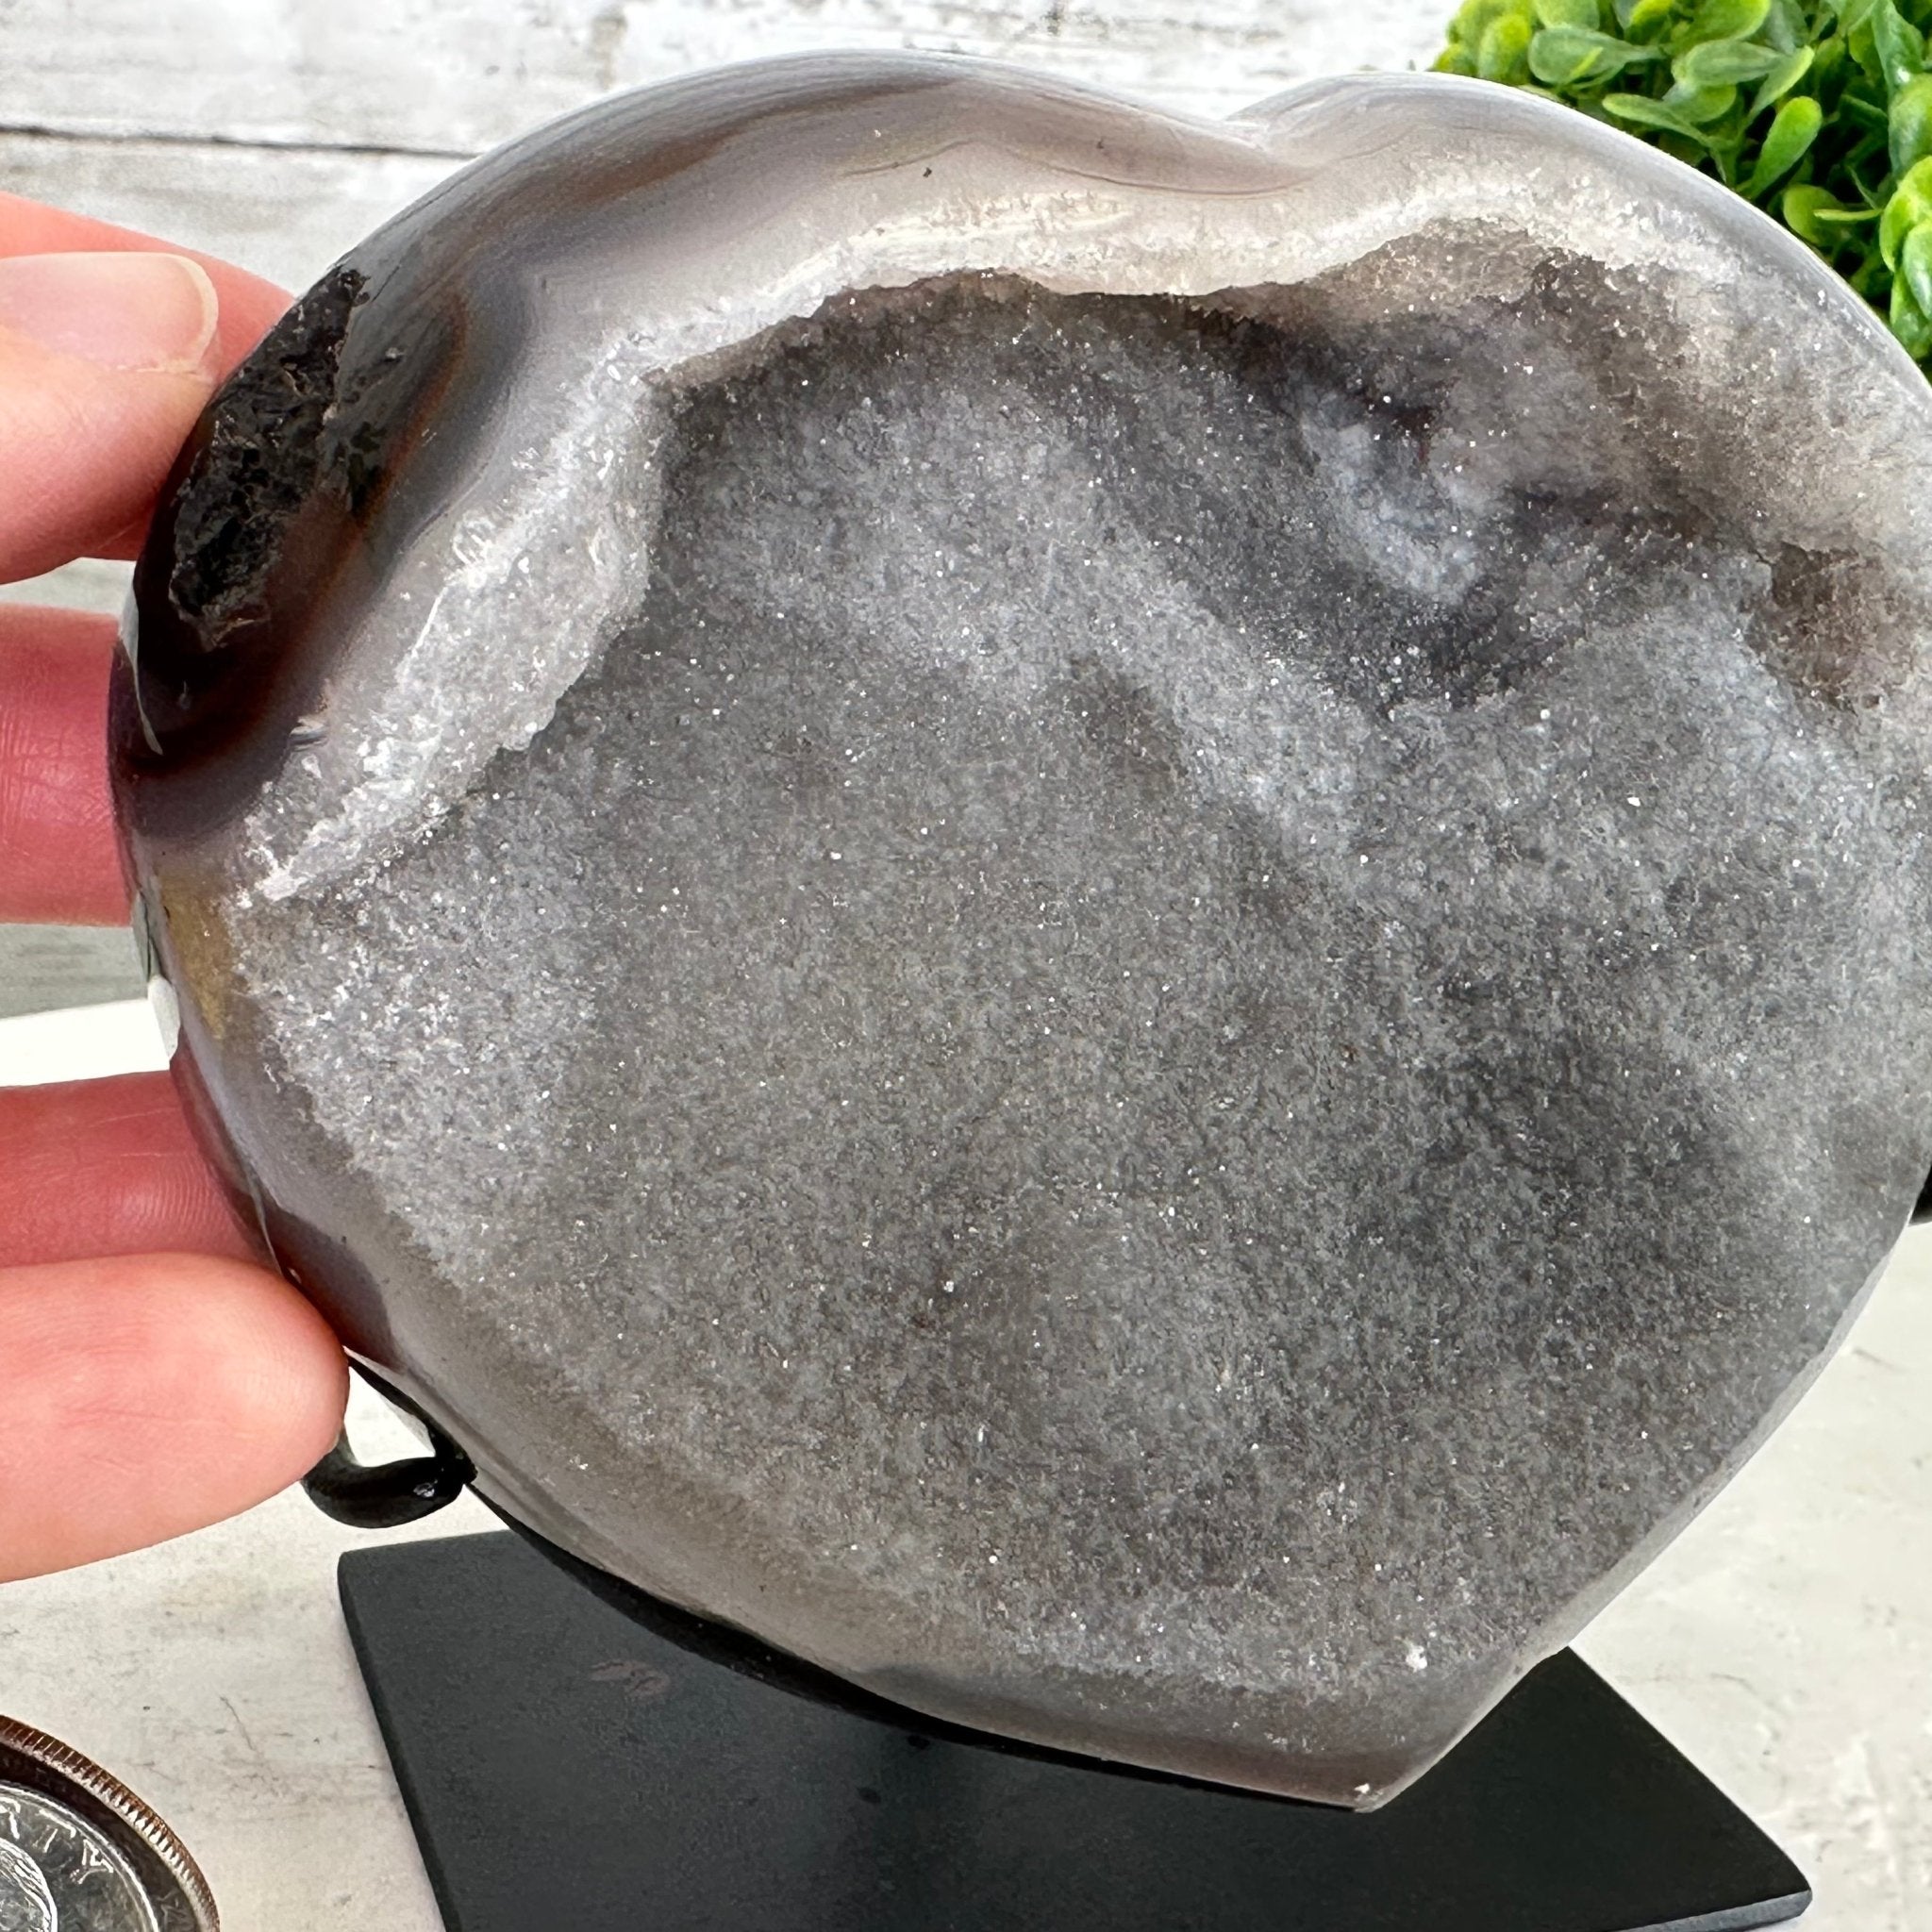 Polished Agate Heart Geode on a Metal Stand, 1.9 lbs & 4.5" Tall, Model #5468-0033 by Brazil Gems - Brazil GemsBrazil GemsPolished Agate Heart Geode on a Metal Stand, 1.9 lbs & 4.5" Tall, Model #5468-0033 by Brazil GemsHearts5468-0033